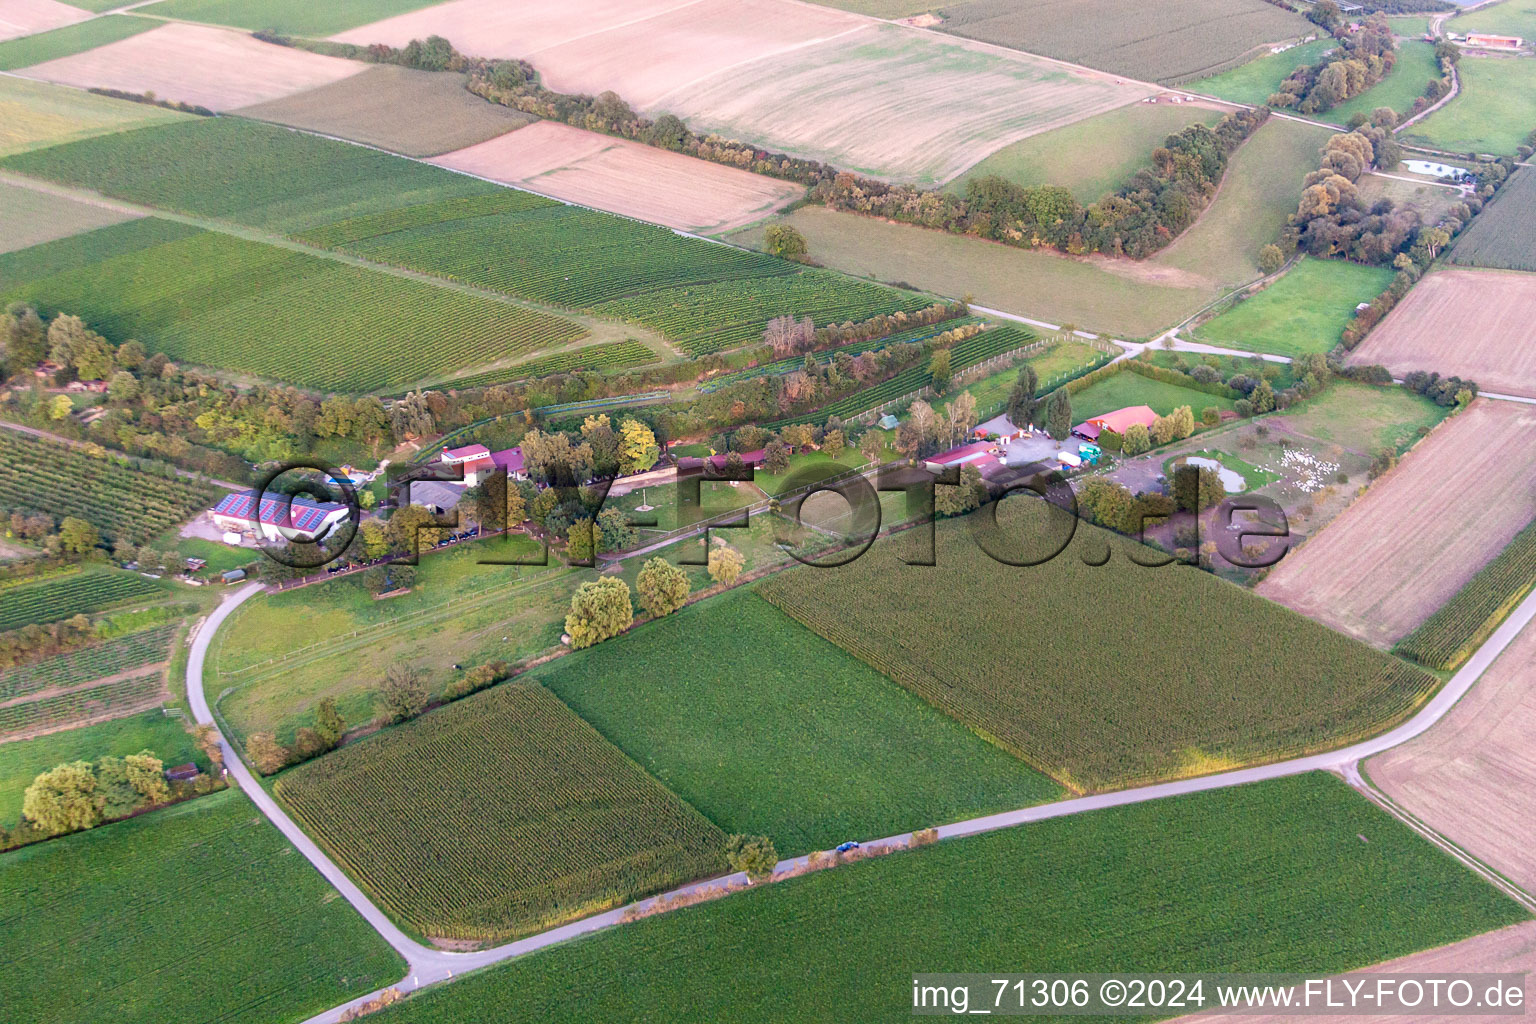 Wagner Ranch in Herxheim bei Landau in the state Rhineland-Palatinate, Germany